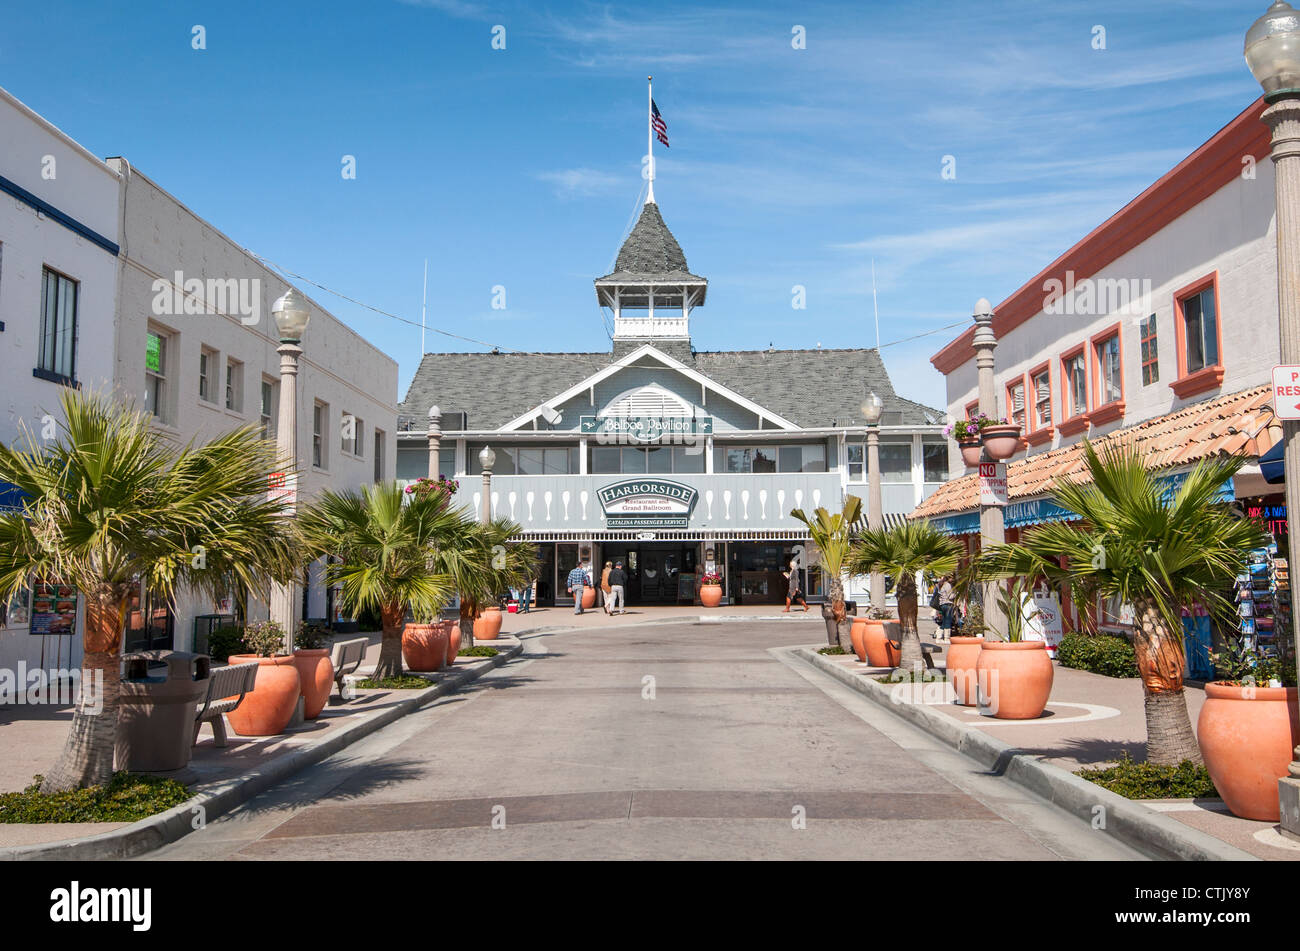 The landmark Balboa Pavilion in Newport Beach, California. Stock Photo